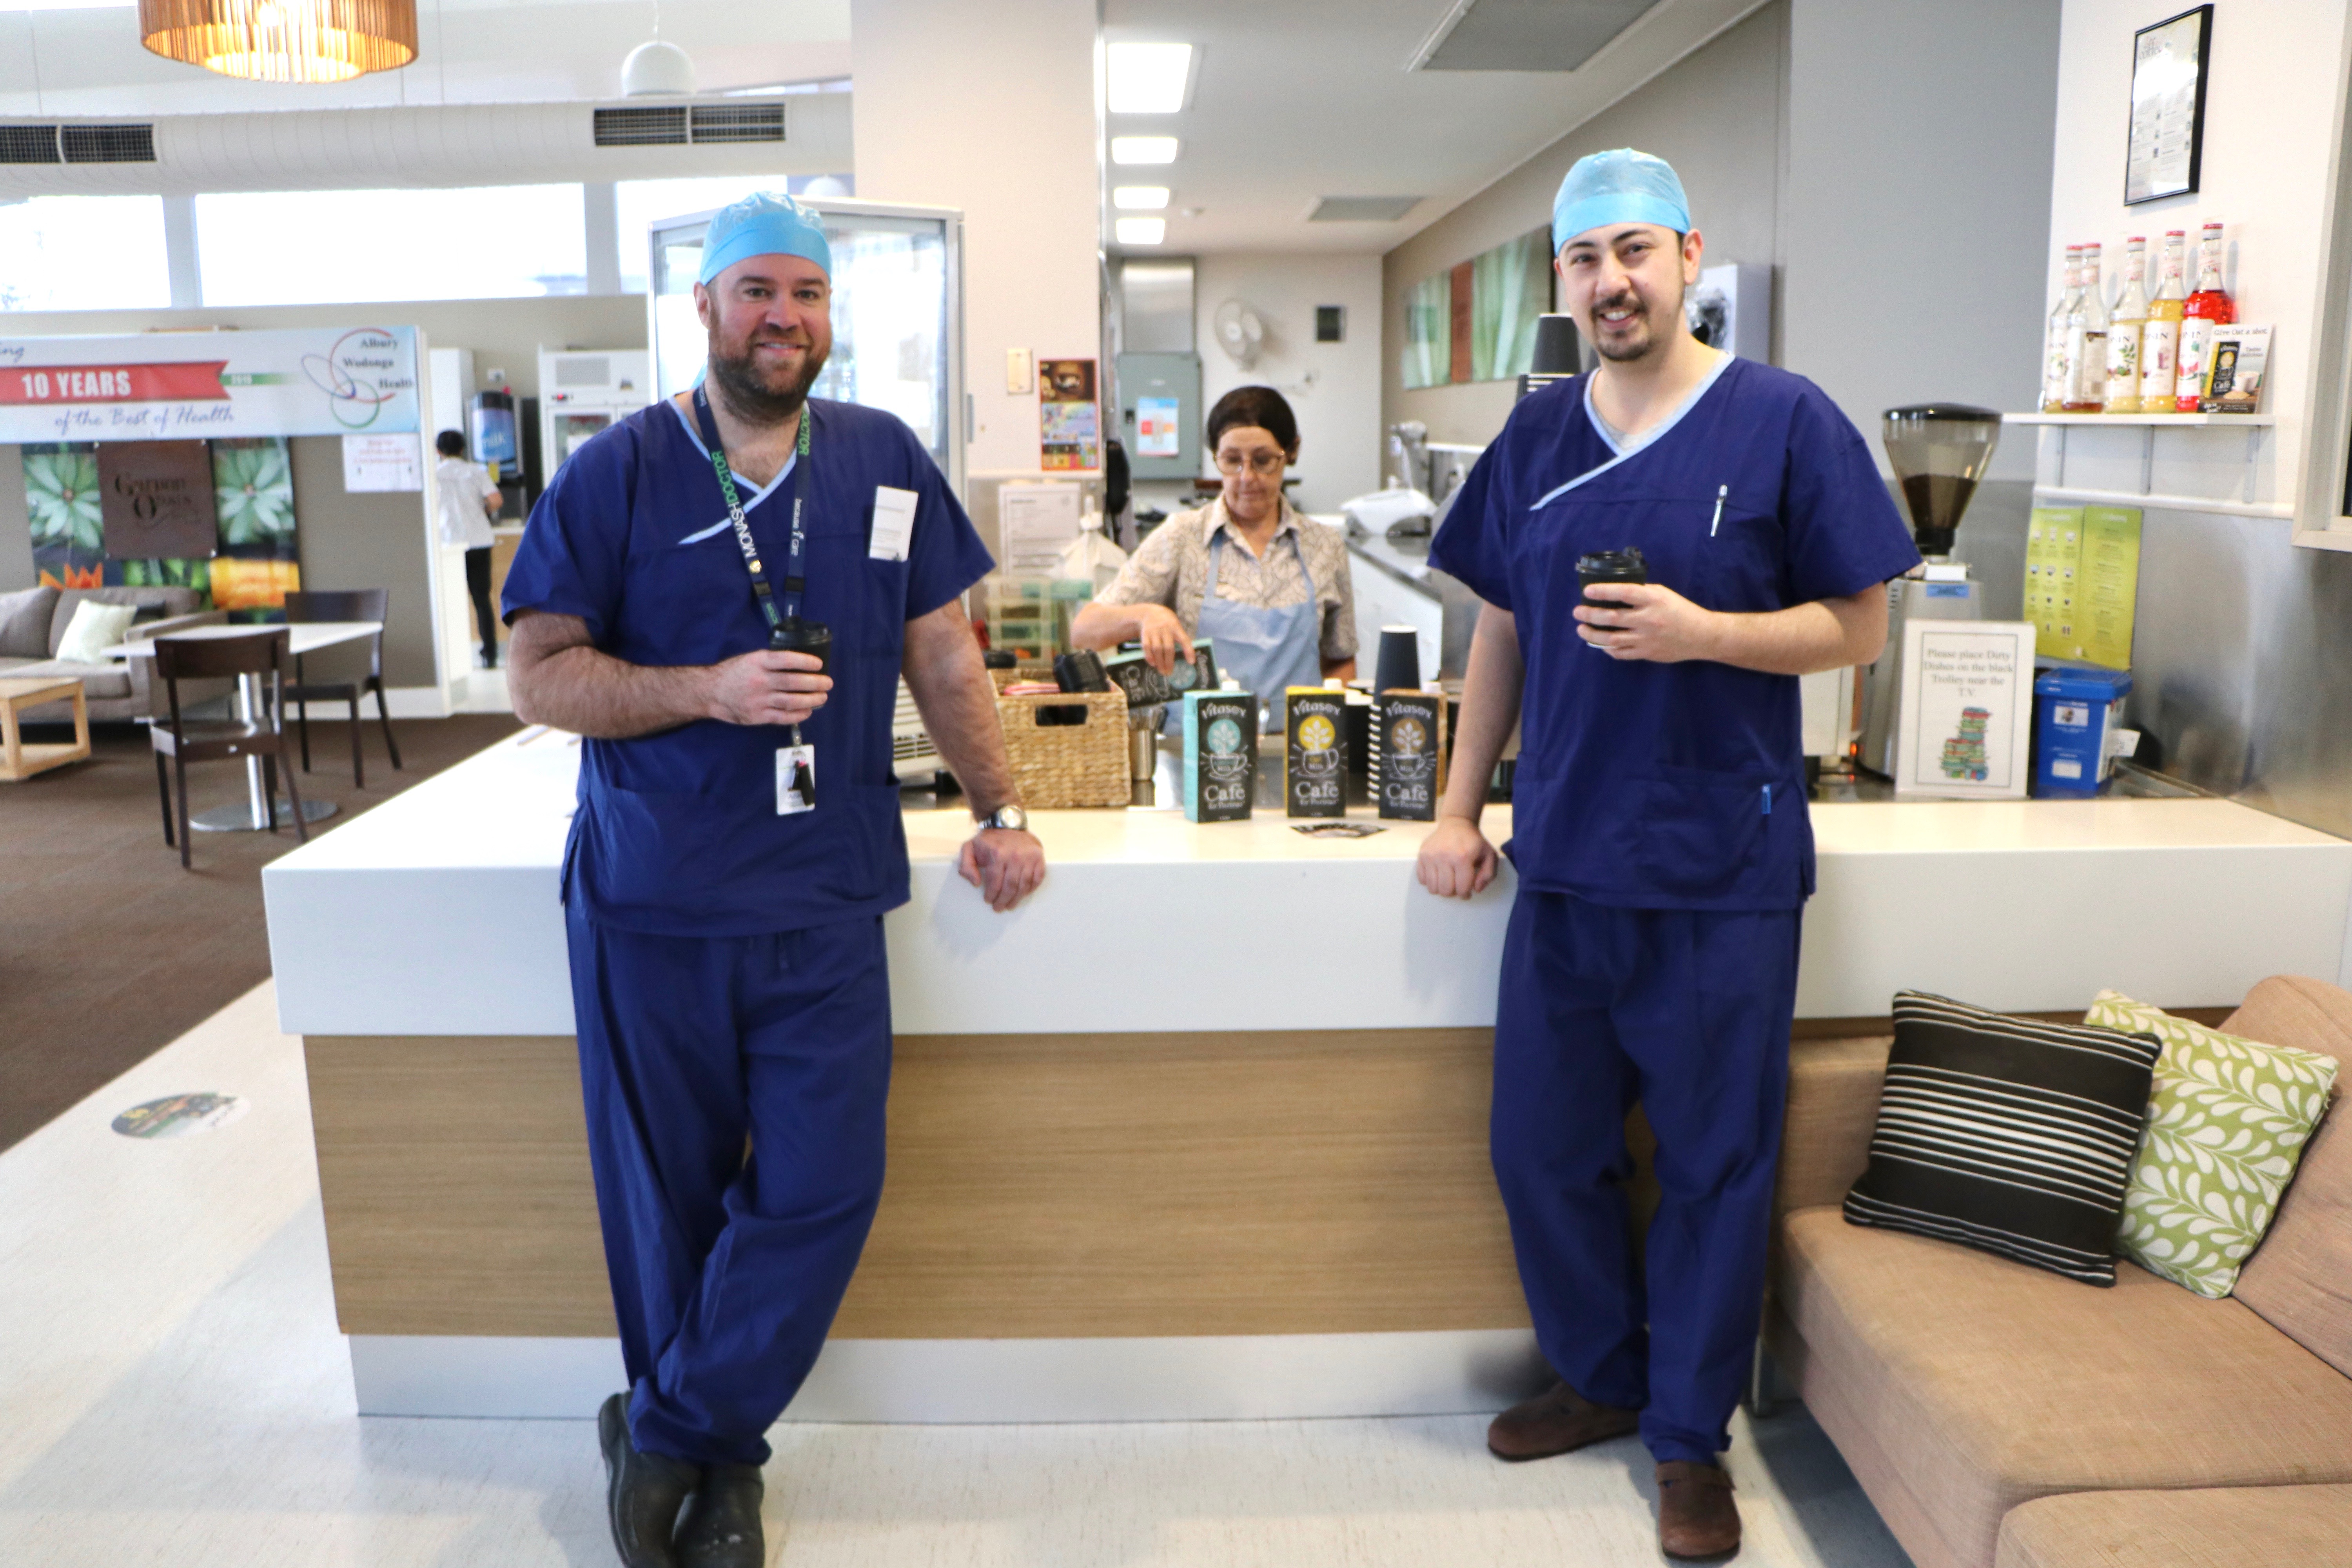 Albury Wodonga Health employees enjoy free coffee as a 'thank you' from Vitasoy